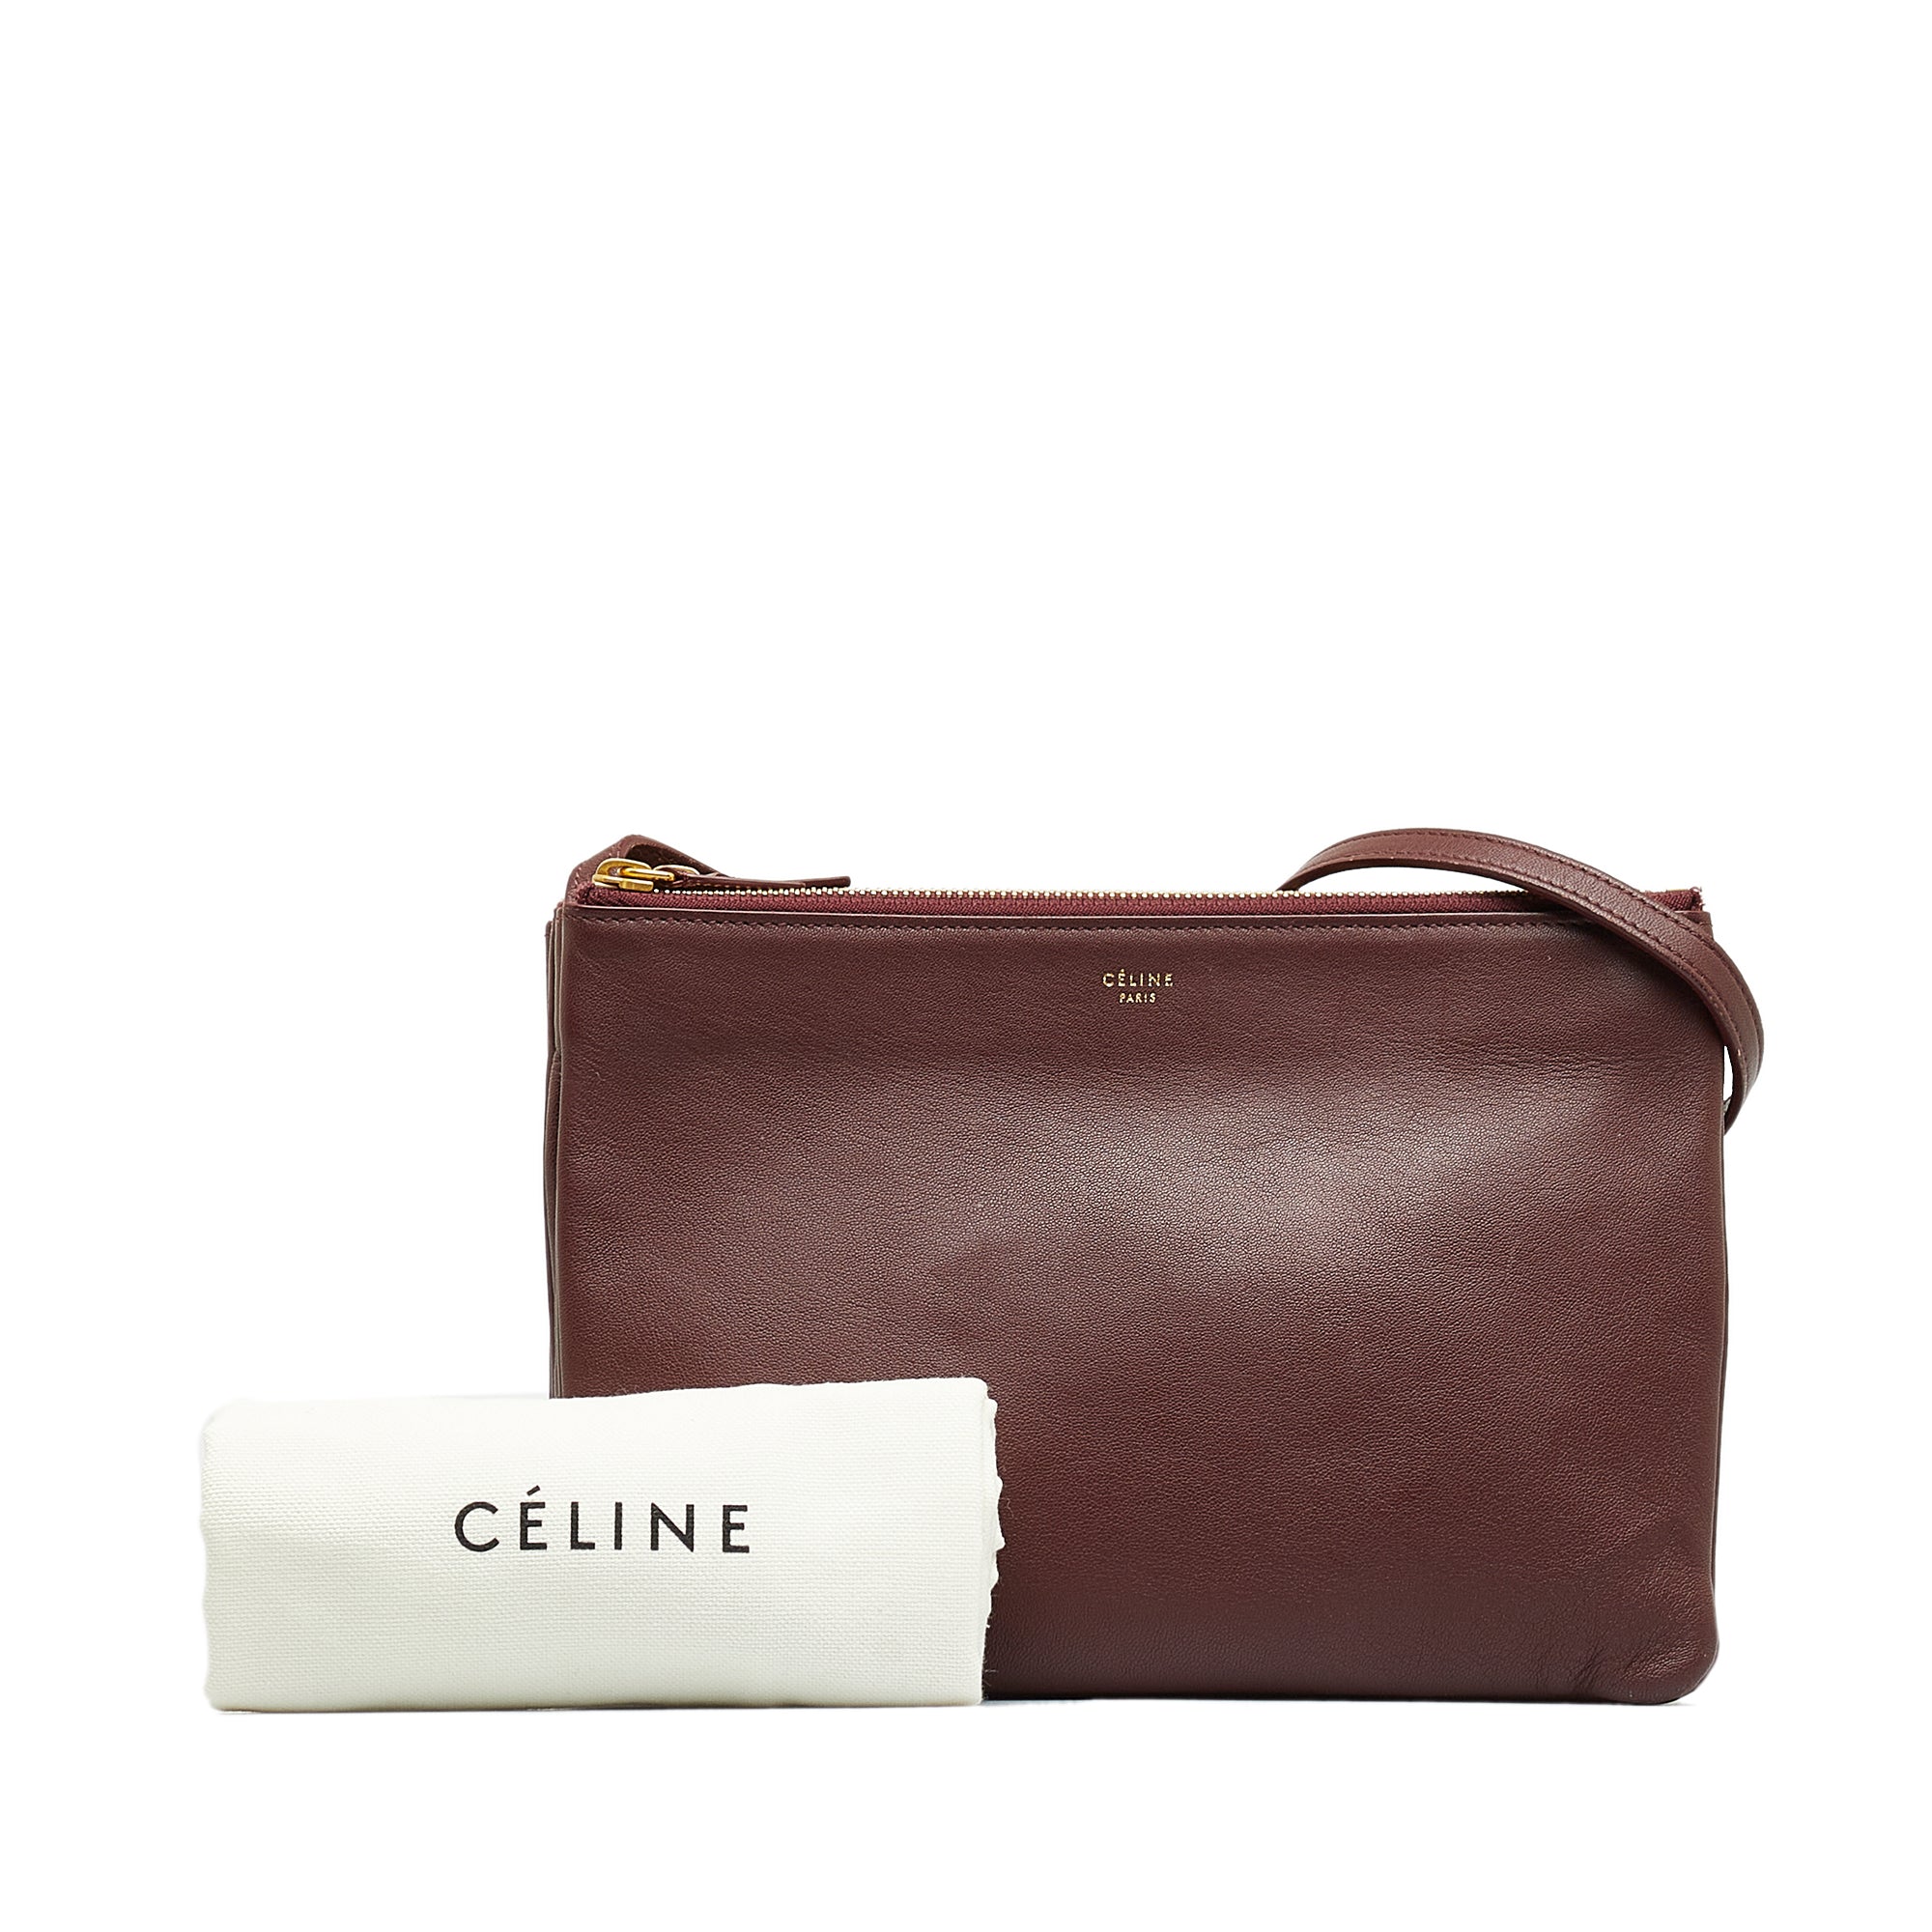 Celine Trio Leather Crossbody Bag In Burgundy